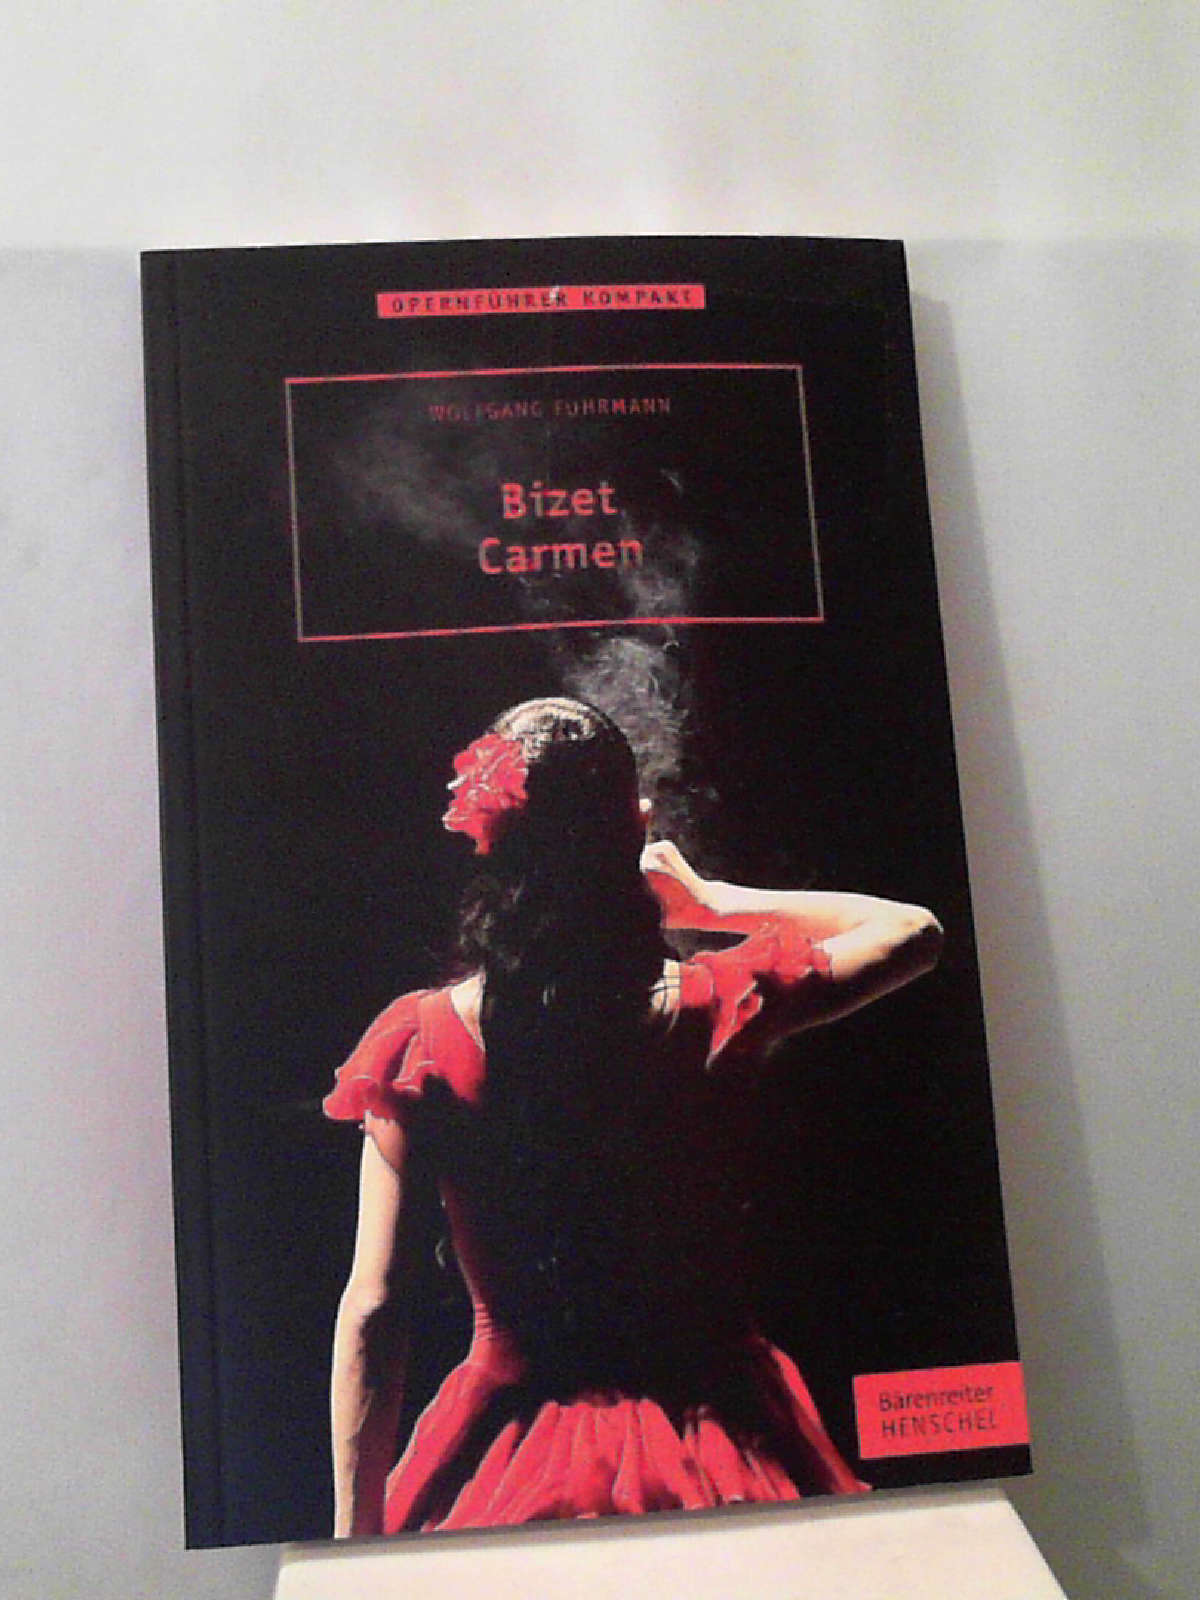 Bizet. Carmen (Opernführer kompakt) [Paperback] Wolfgang Fuhrmann - Wolfgang Fuhrmann